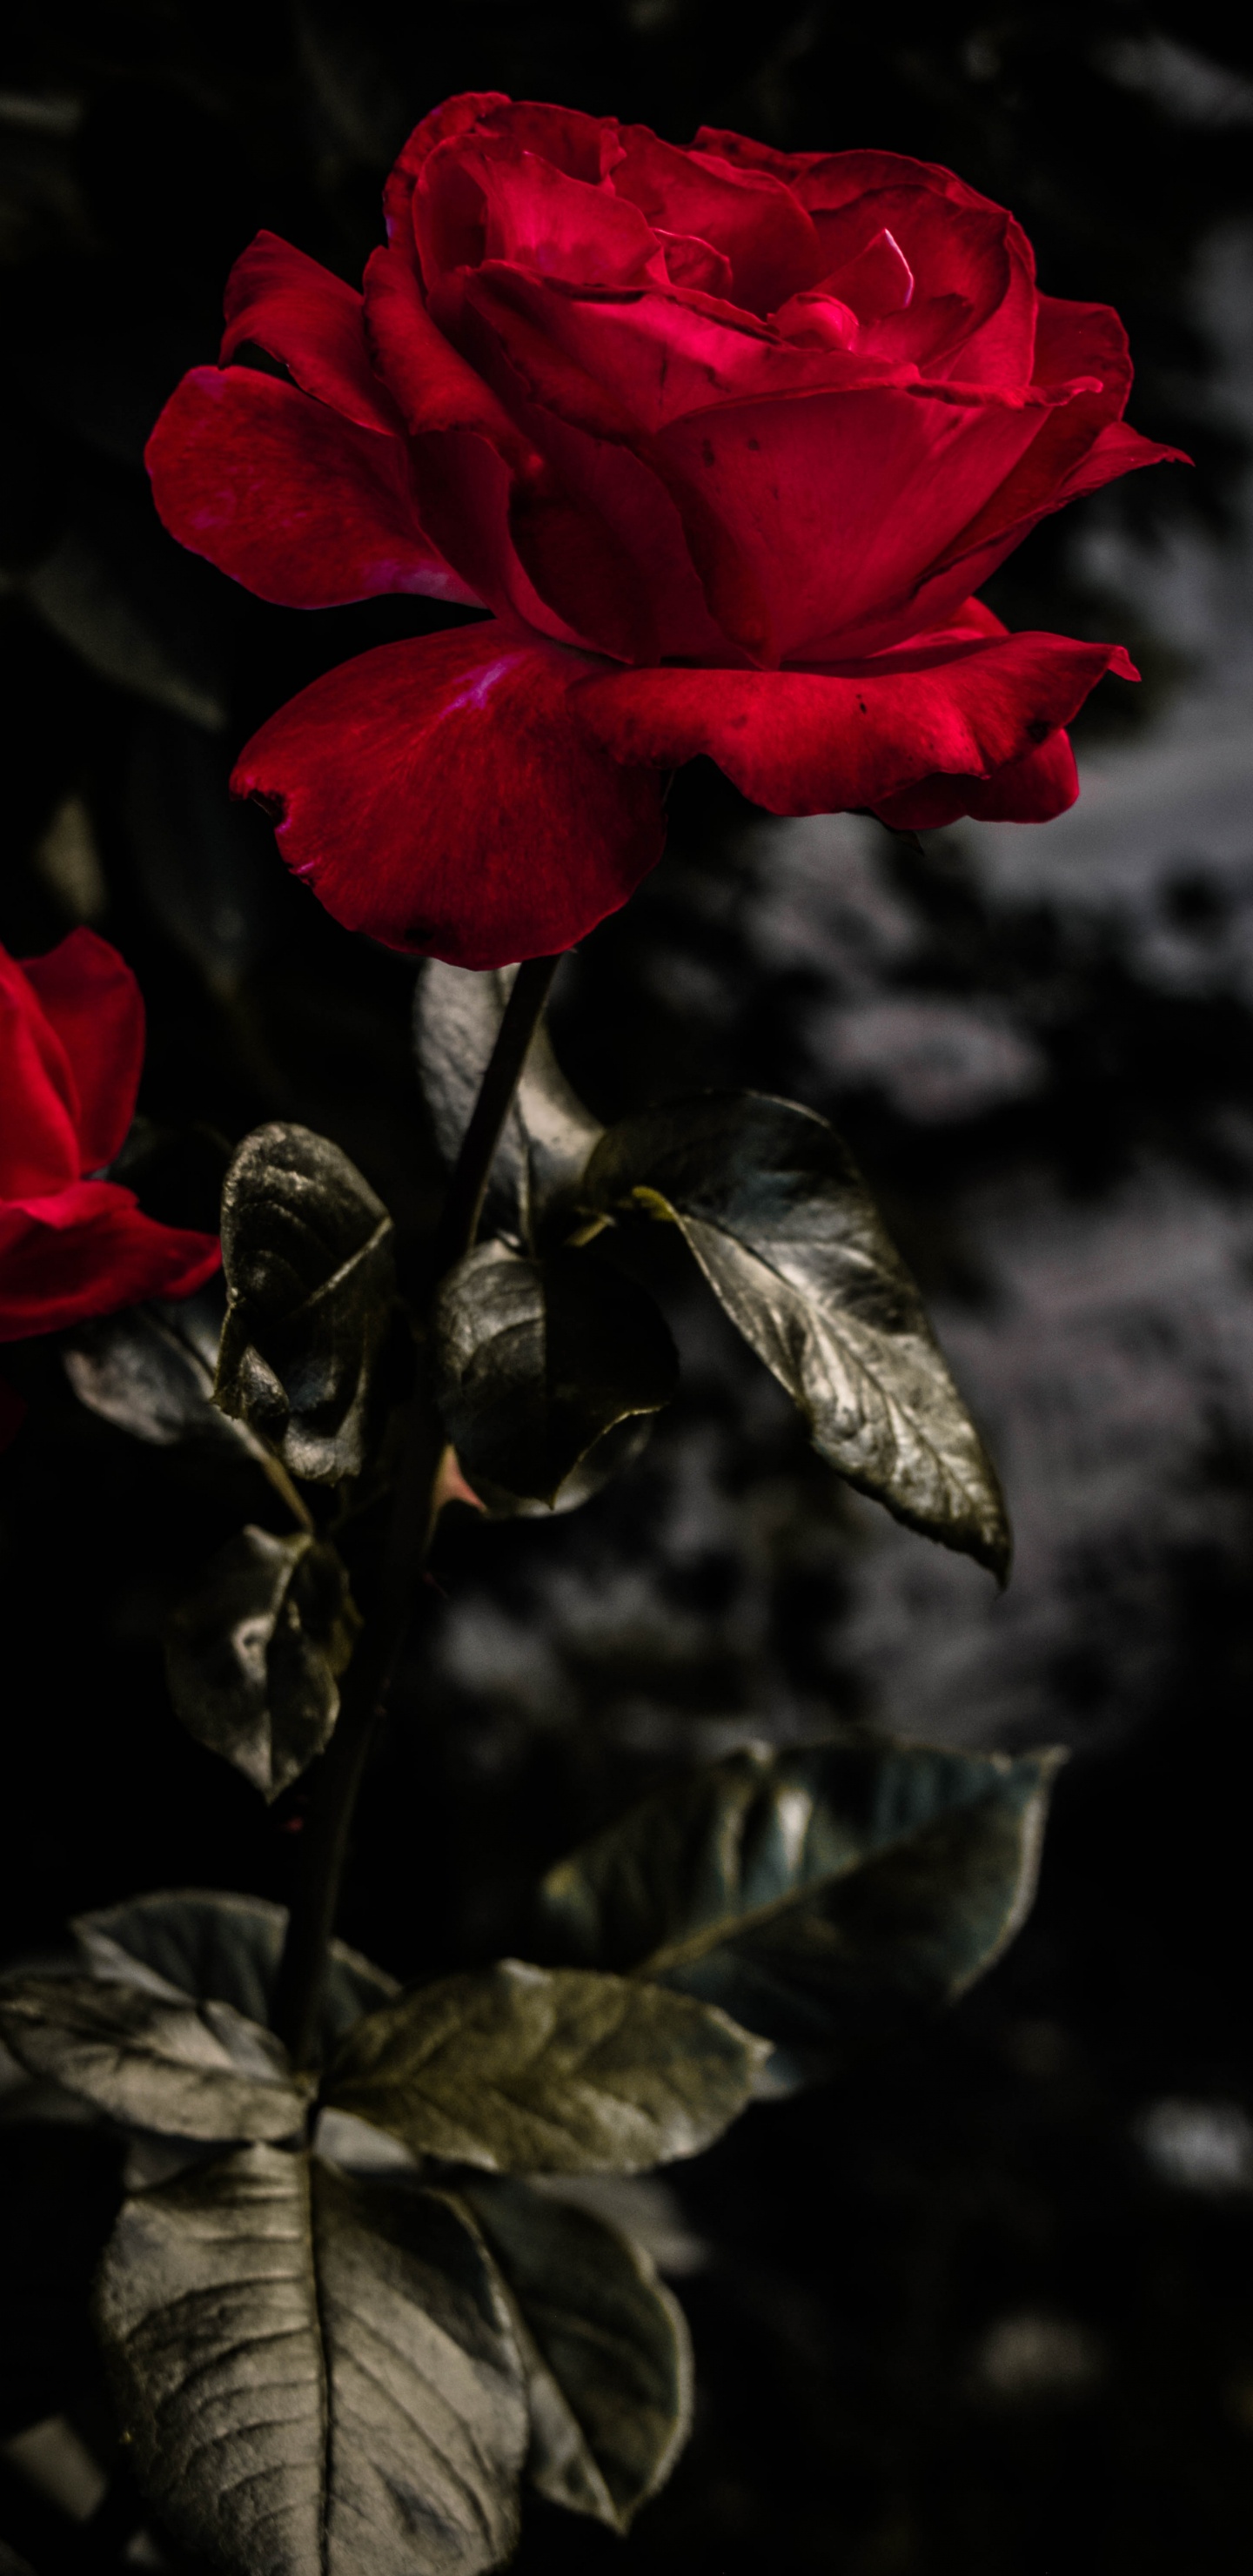 Rose Rouge en Fleurs Pendant la Journée. Wallpaper in 1440x2960 Resolution